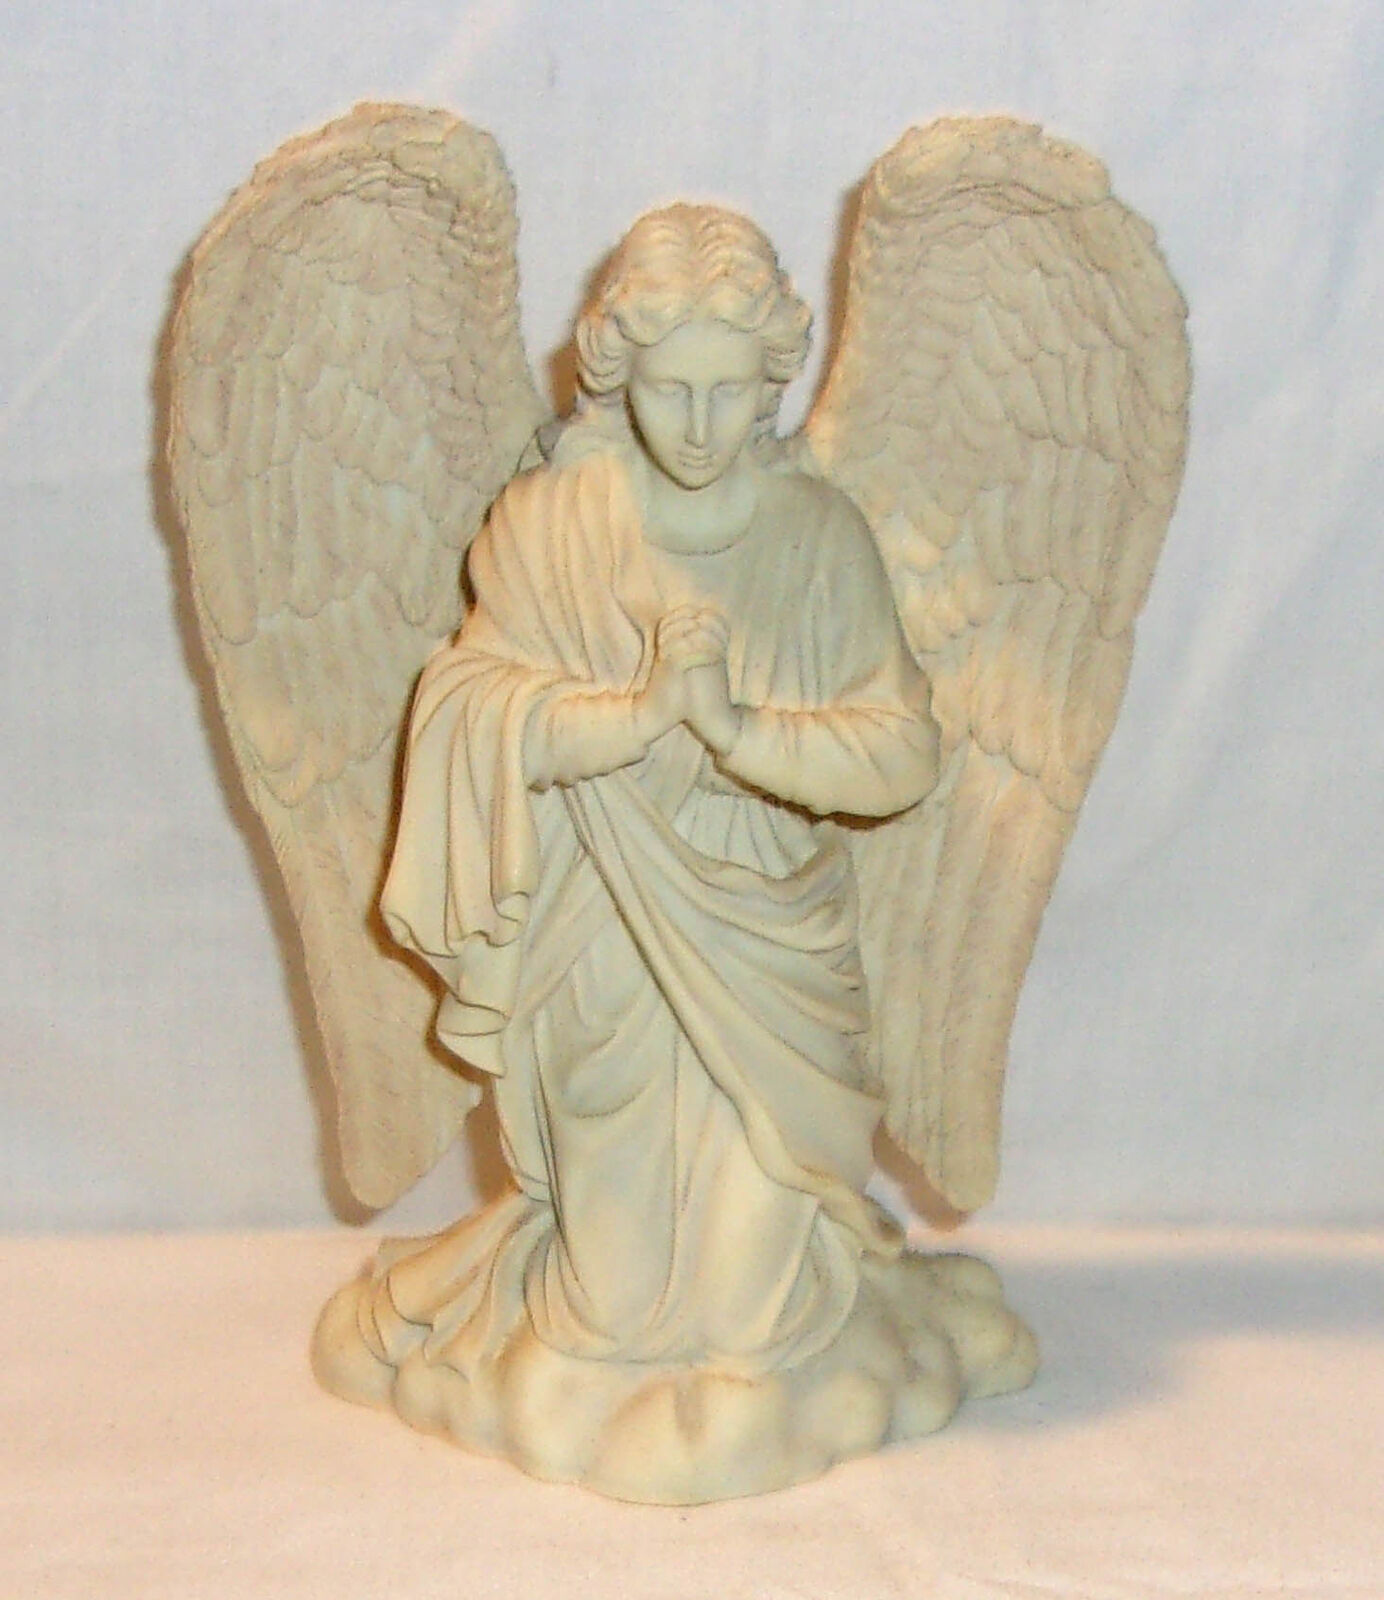 LIFE SYMBOLS MEMORIAL PRAYING ANGEL FIGURINE - BATESVILLE CASKET COMPANY